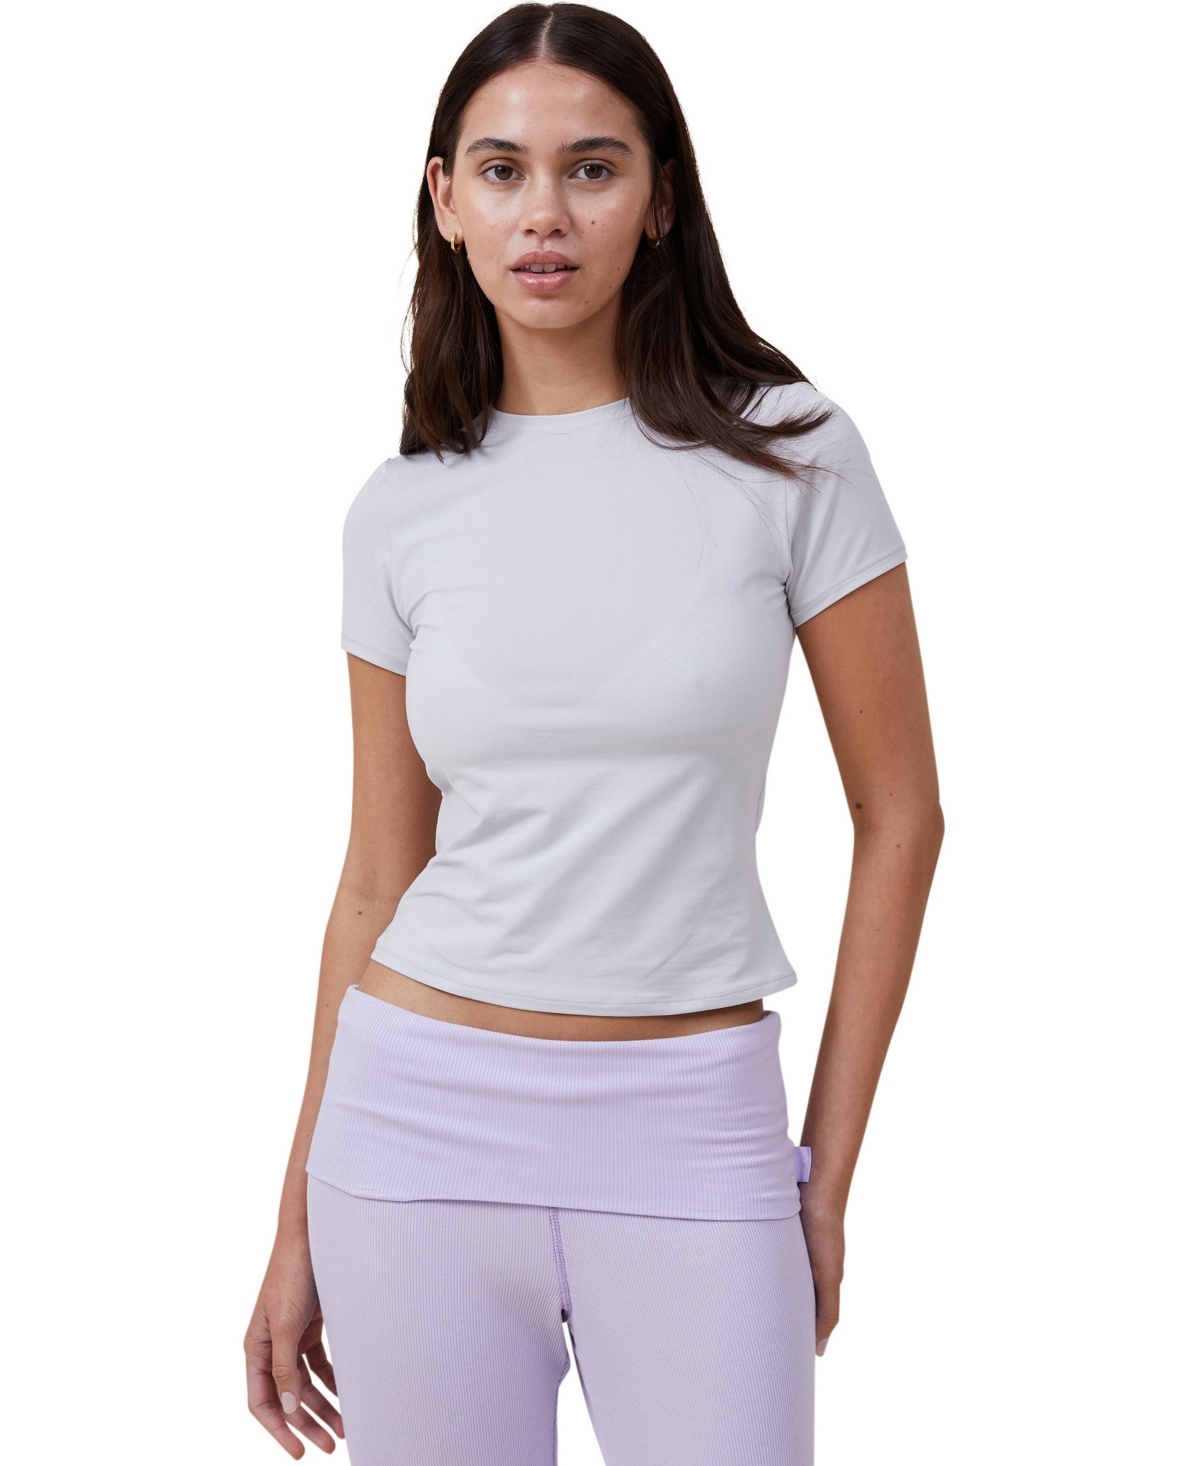 Women's Soft Lounge Fitted T-shirt - Whisper White